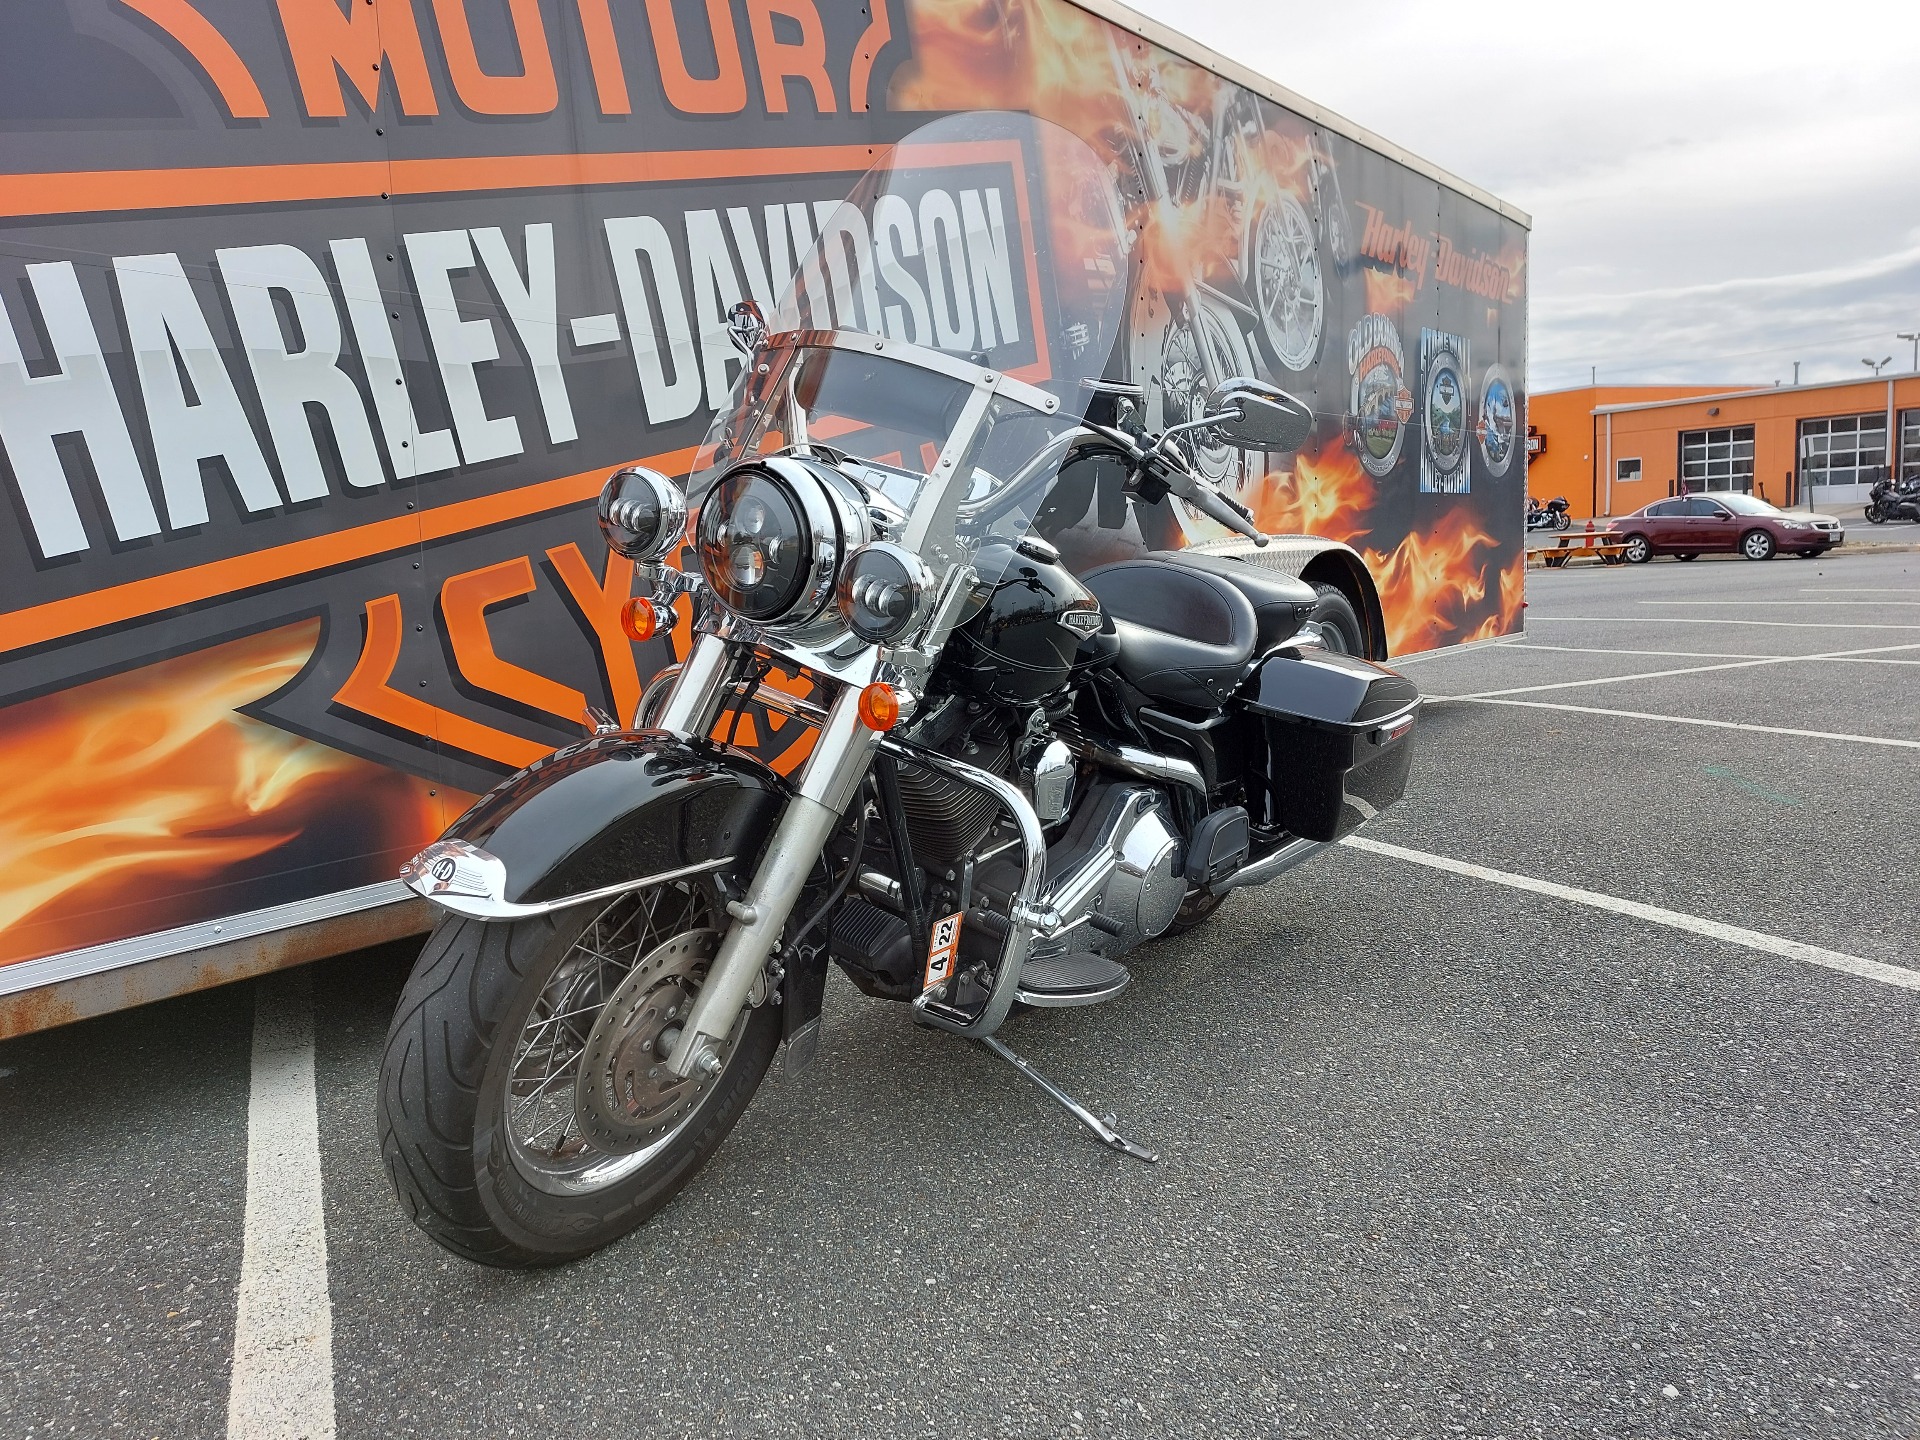 2005 Harley-Davidson FLHRCI Road King® Classic in Fredericksburg, Virginia - Photo 4